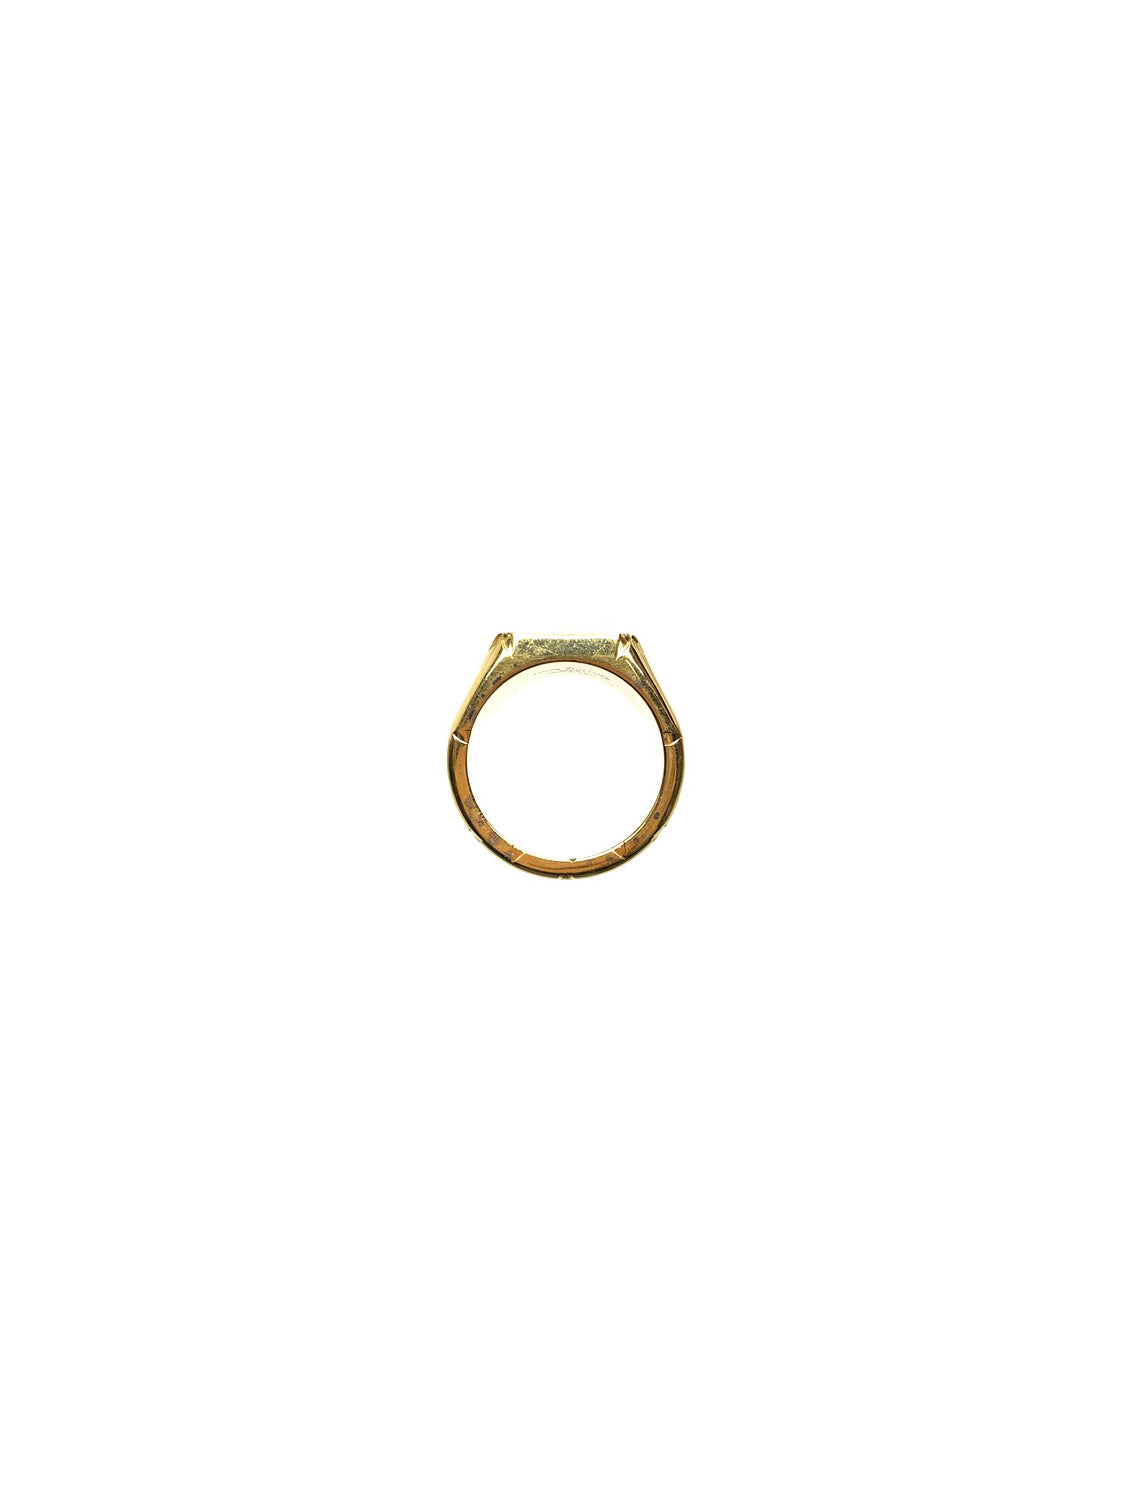 Louis Vuitton Signet LV Logo Ring - Size 9